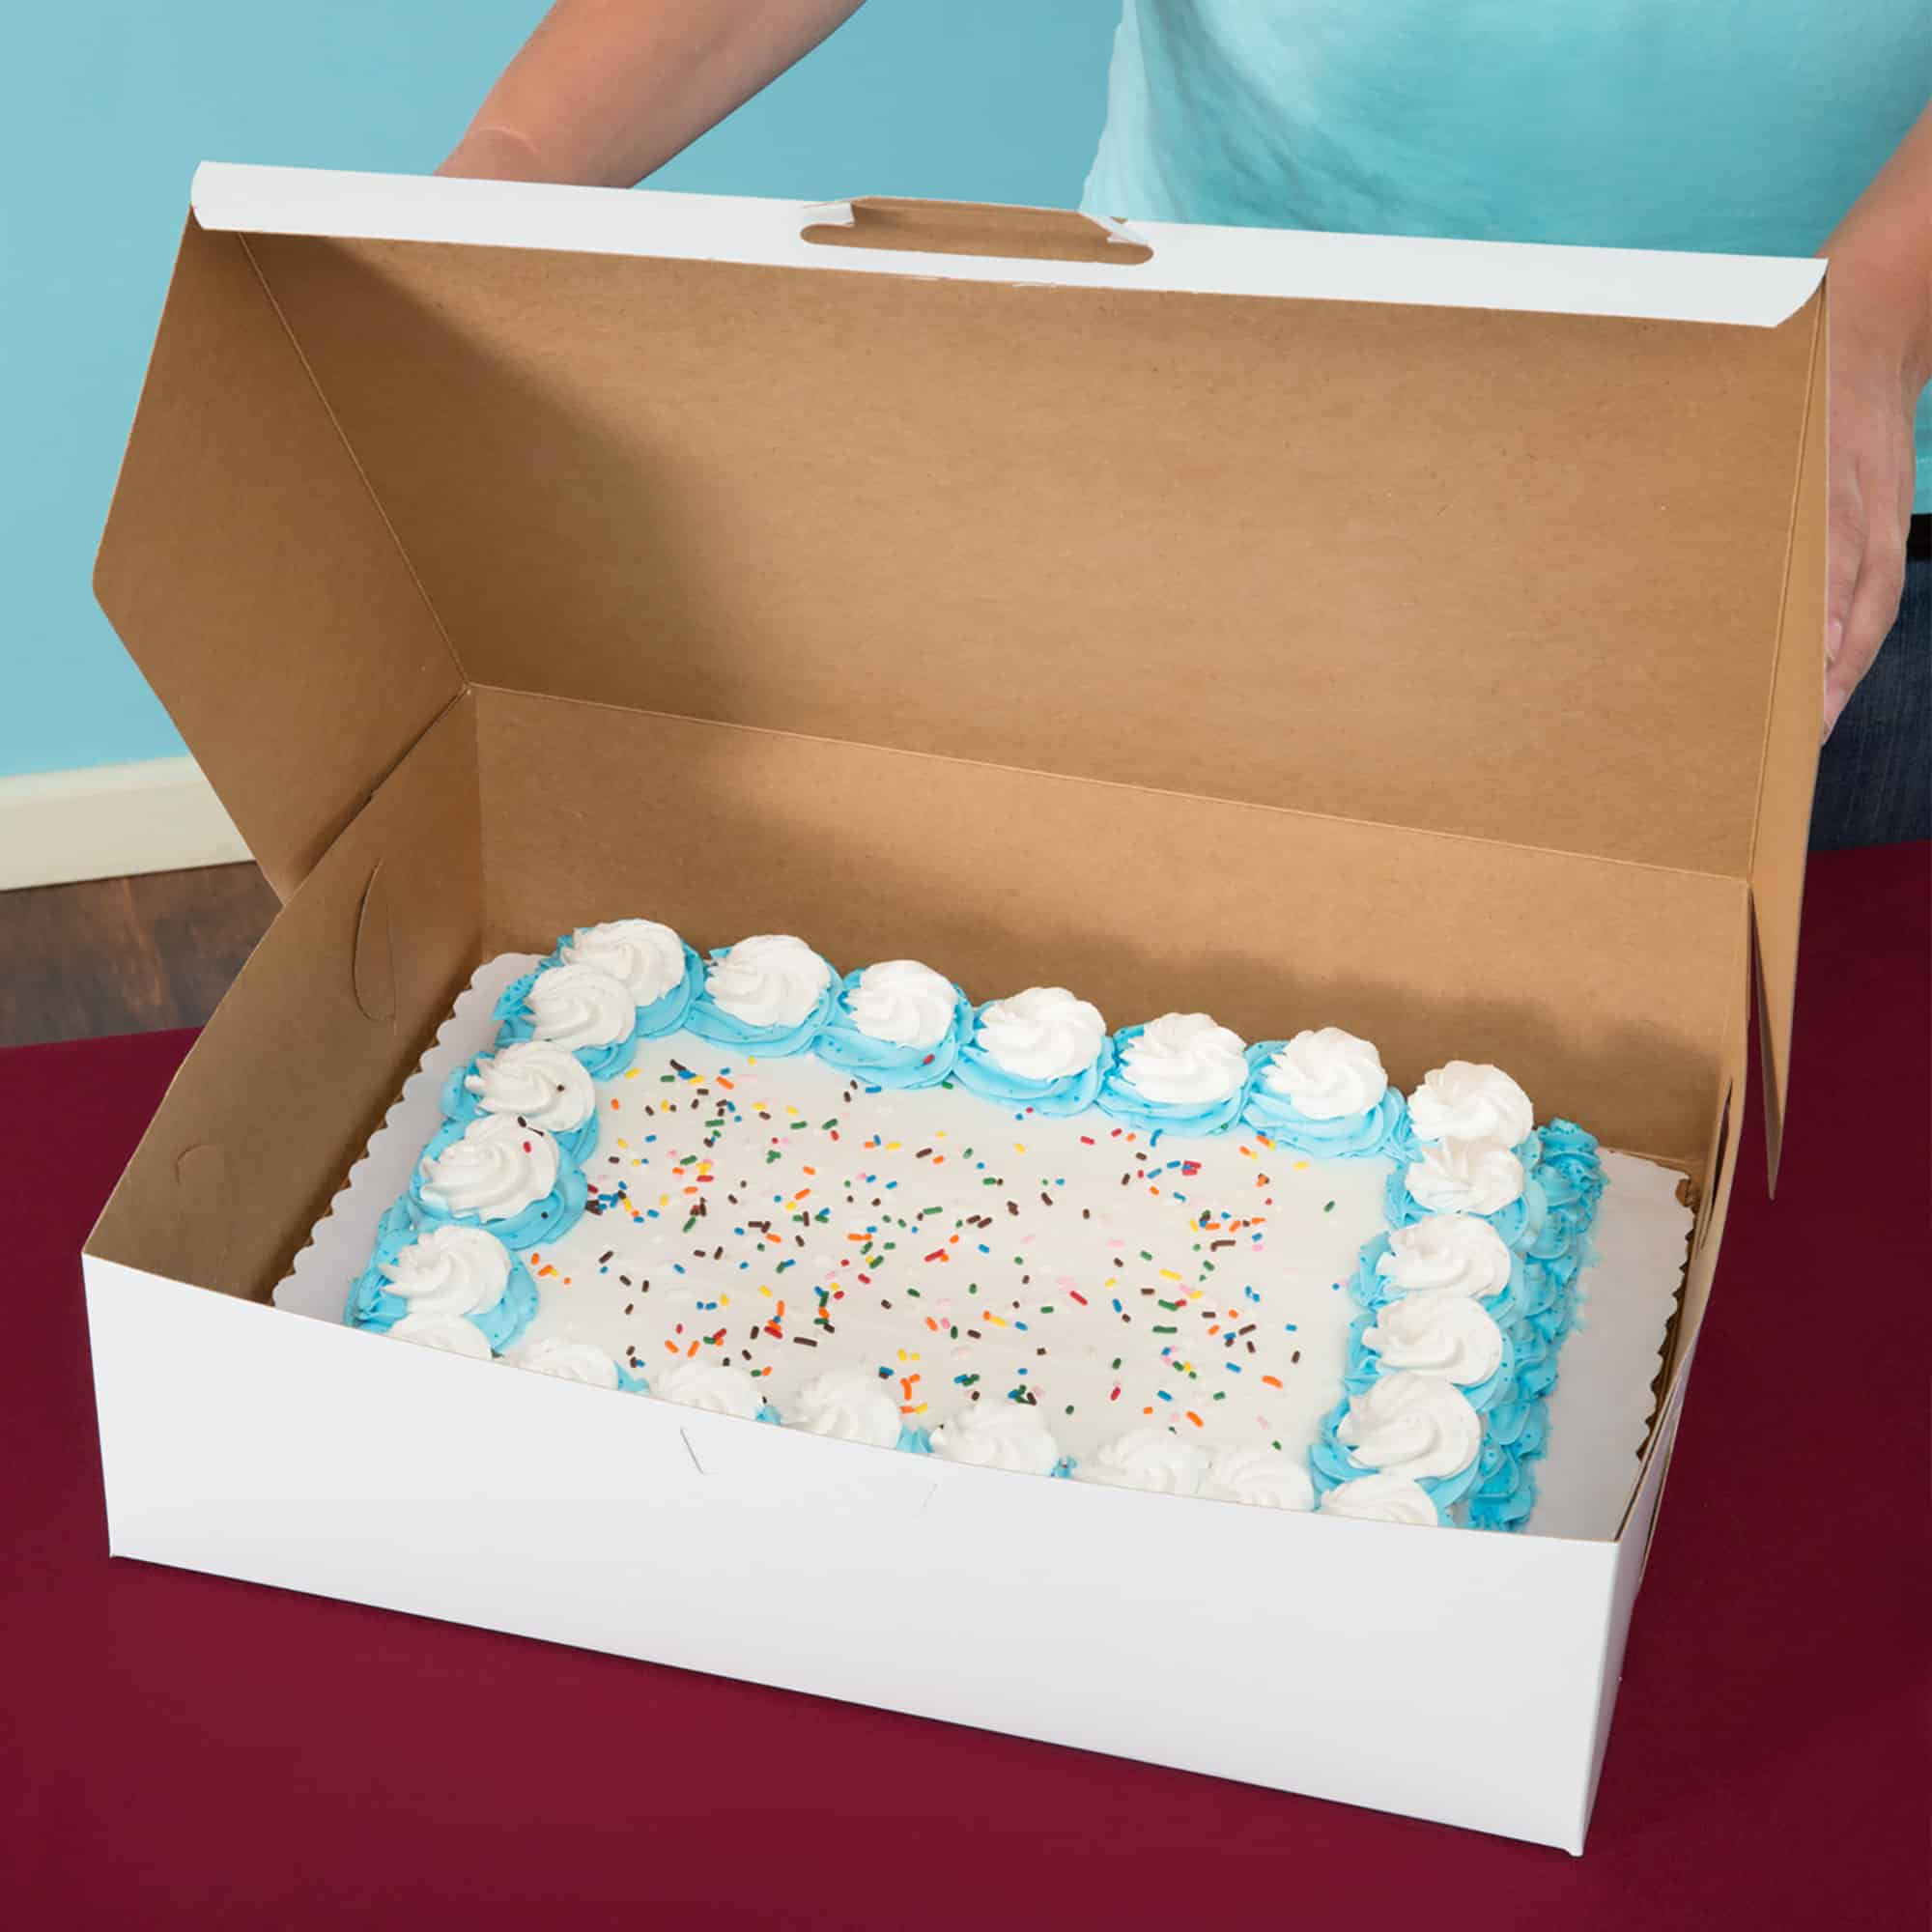 19"  x 14"  x 5"  White Half Sheet Cake / Bakery Box